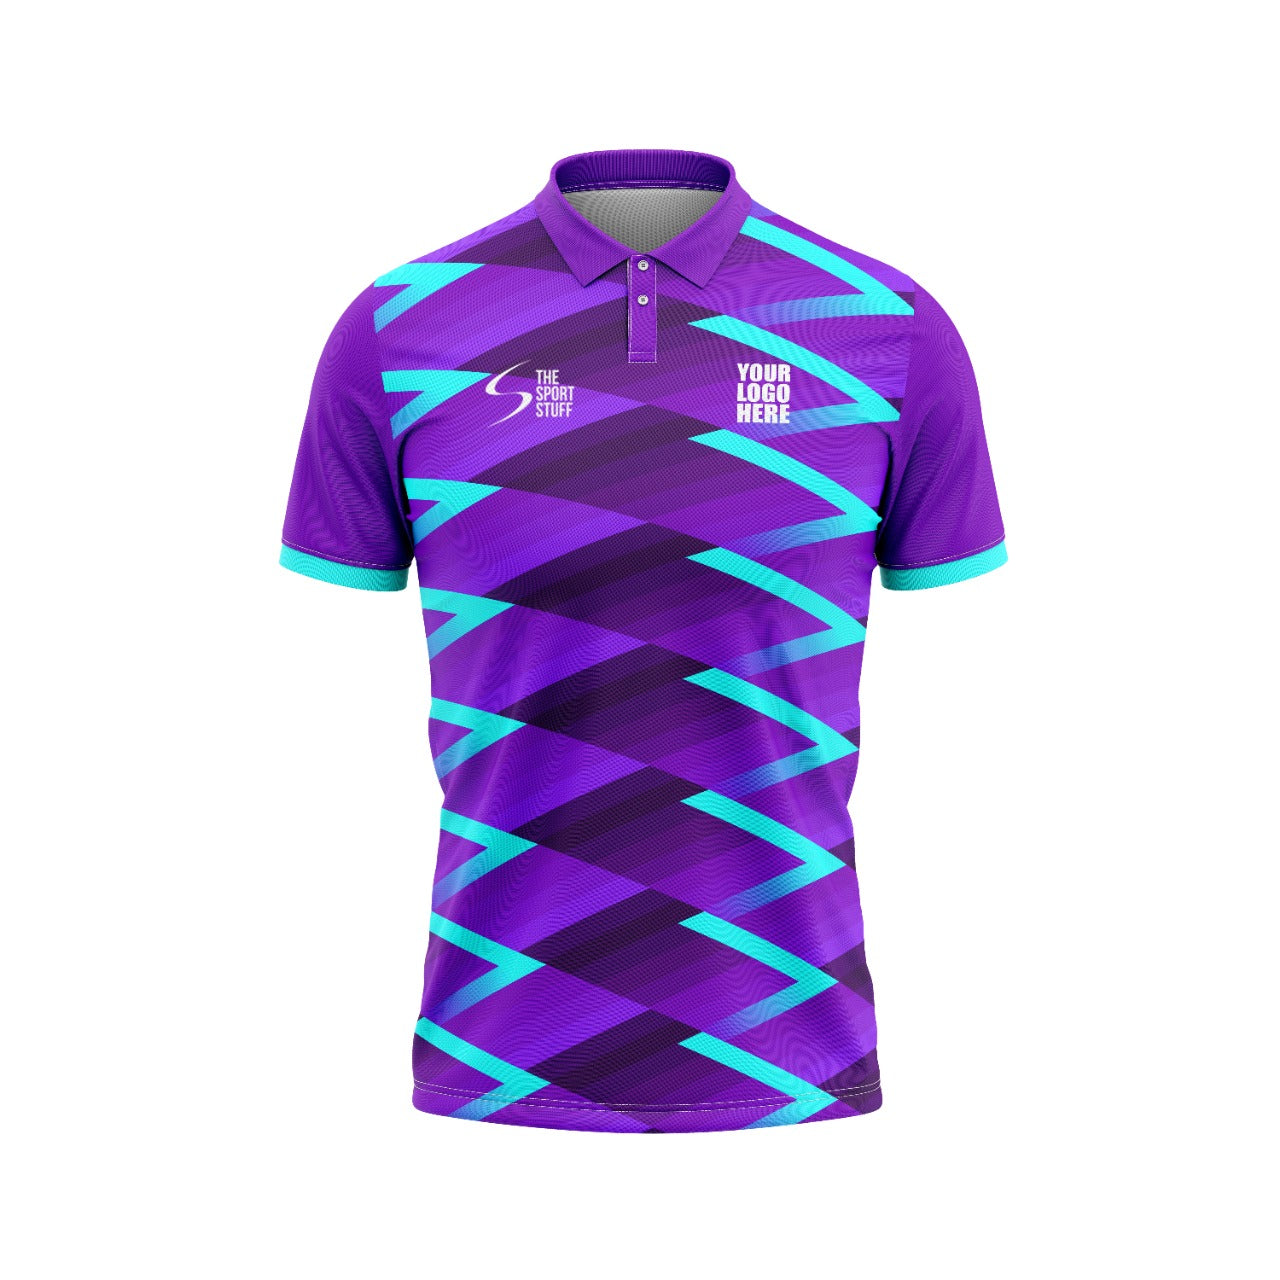 Purple Diamond Customized Cricket Team Jersey Design | Customized Cricket Jerseys Online India - TheSportStuff Without Trackpant / Half Sleeve / Strip